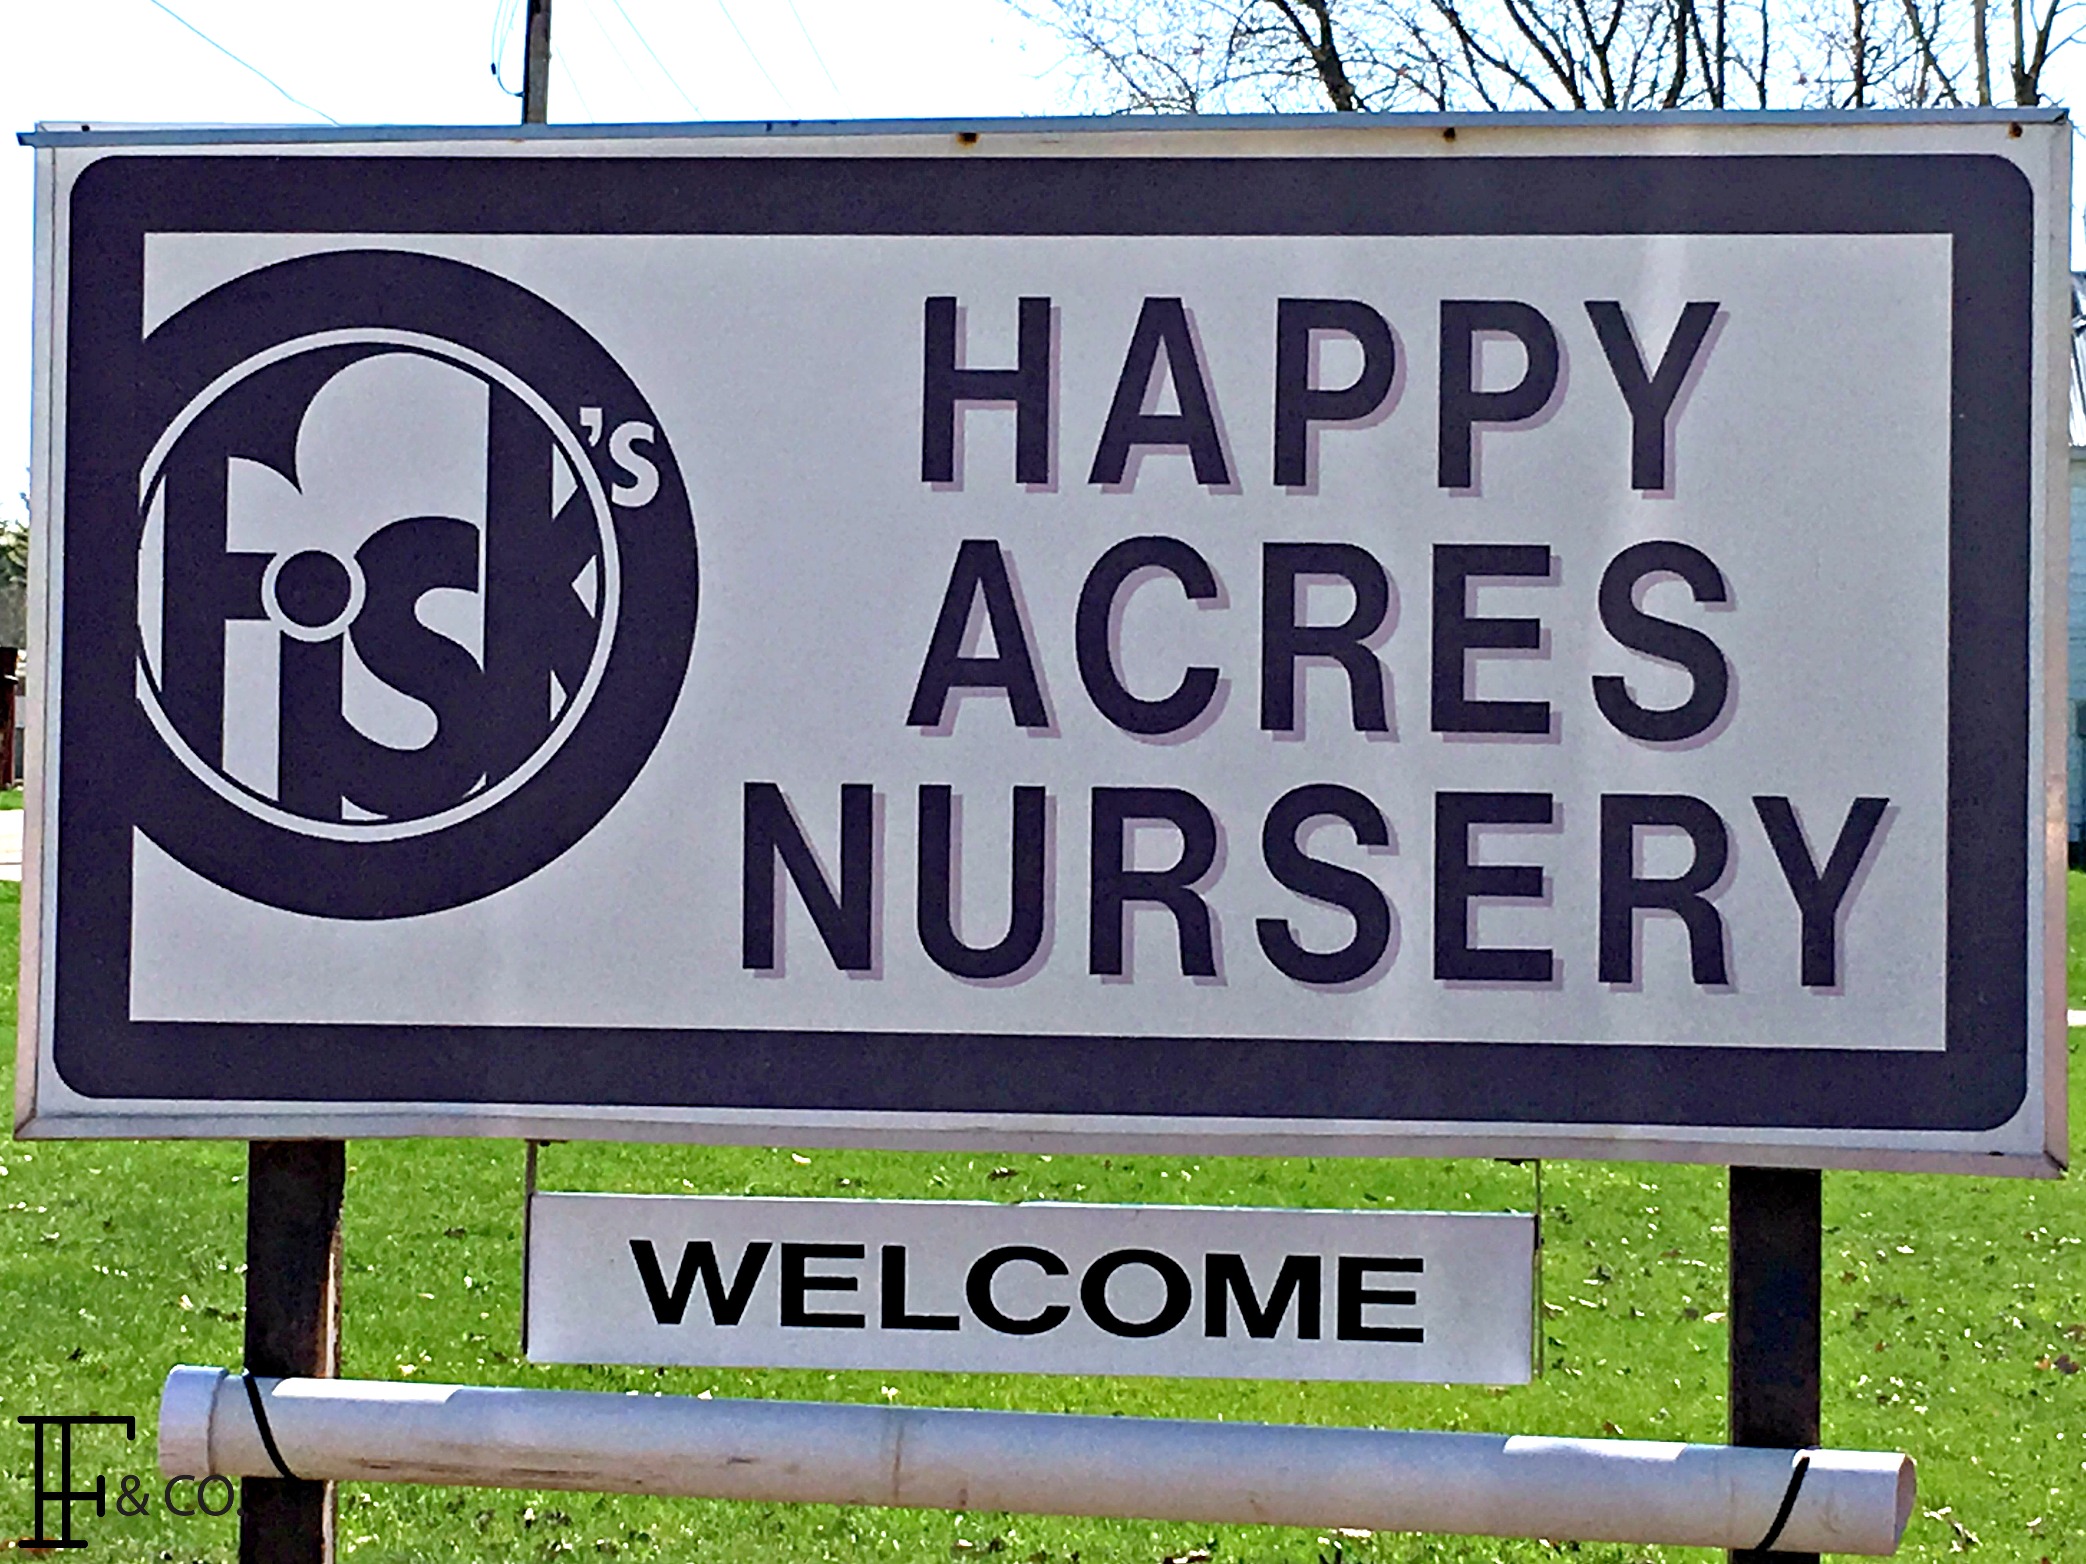 Exploring our Backyard: Happy Acres Nursery in Osage, Iowa